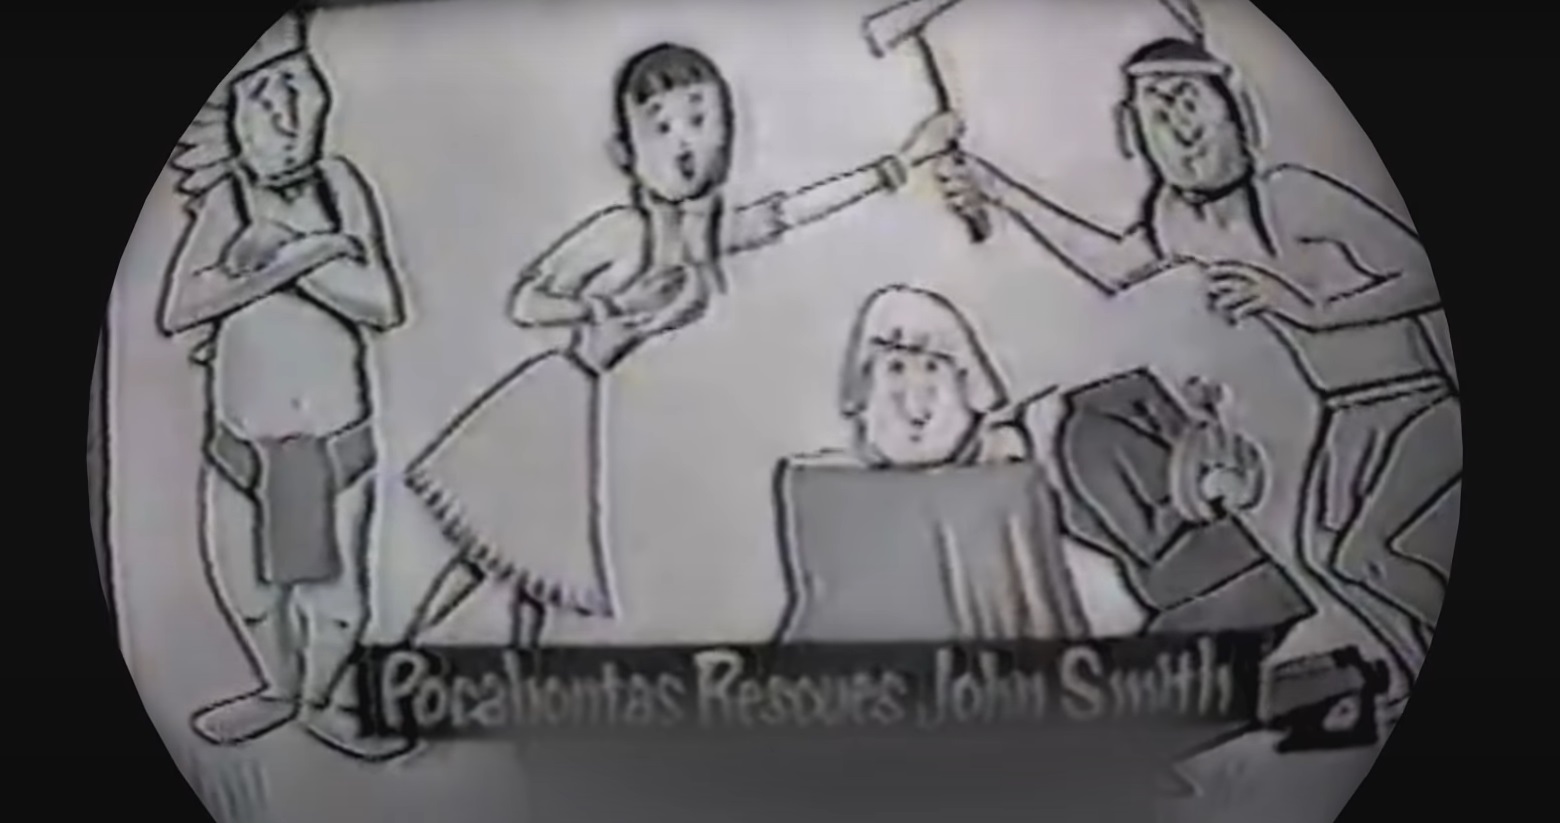 A cartoon of Pocahontas saving John Smith